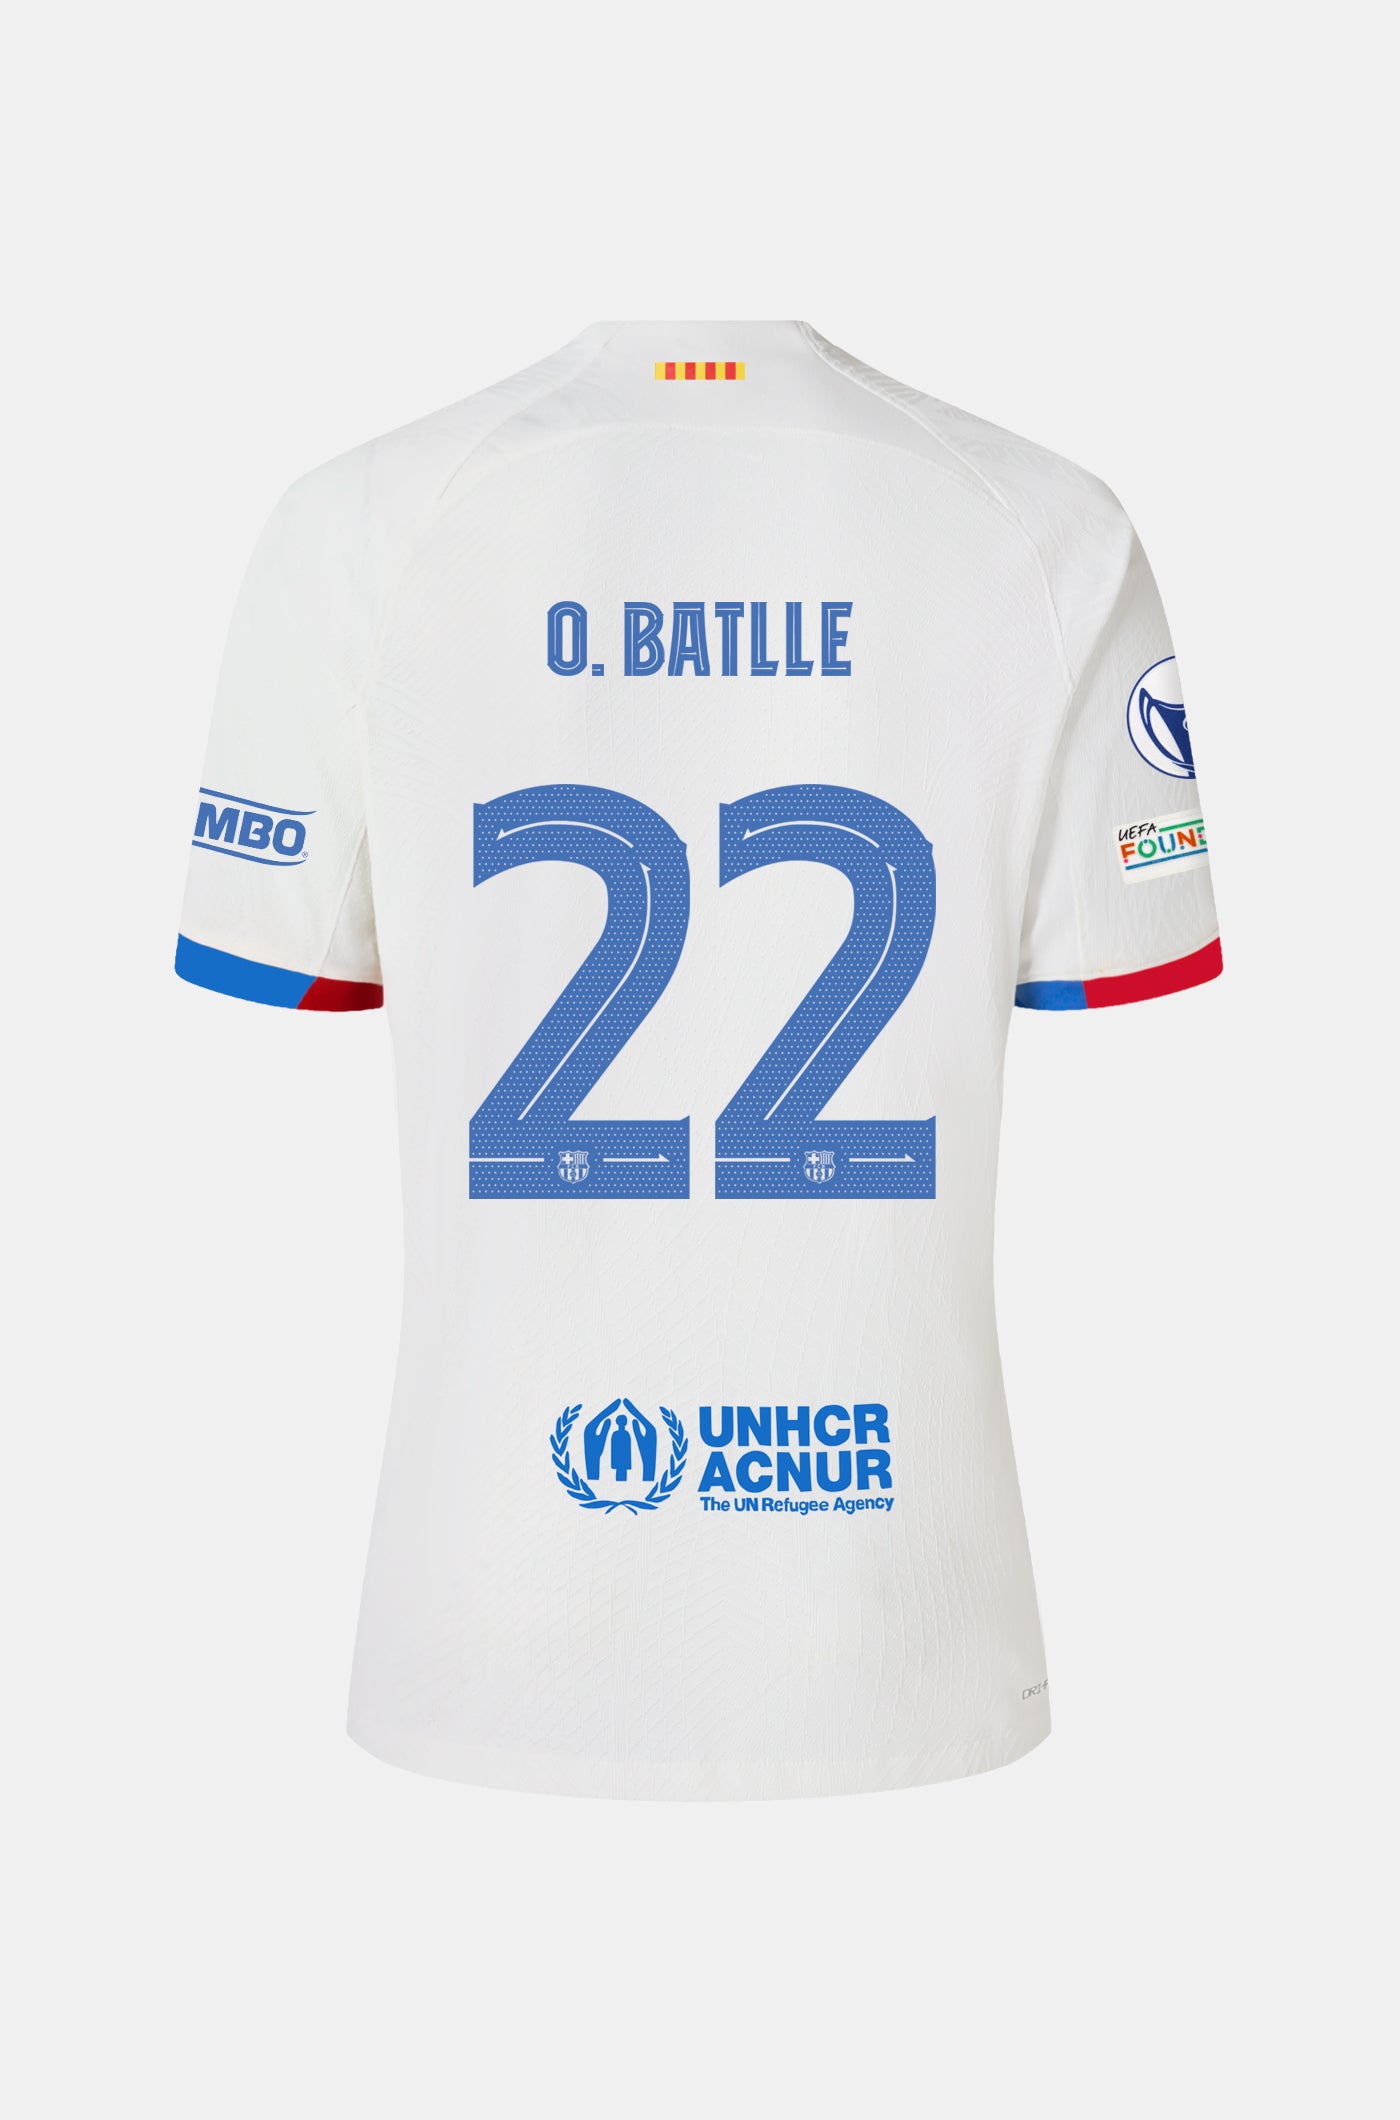 UWCL FC Barcelona away shirt 23/24 Player's Edition - O. BATLLE